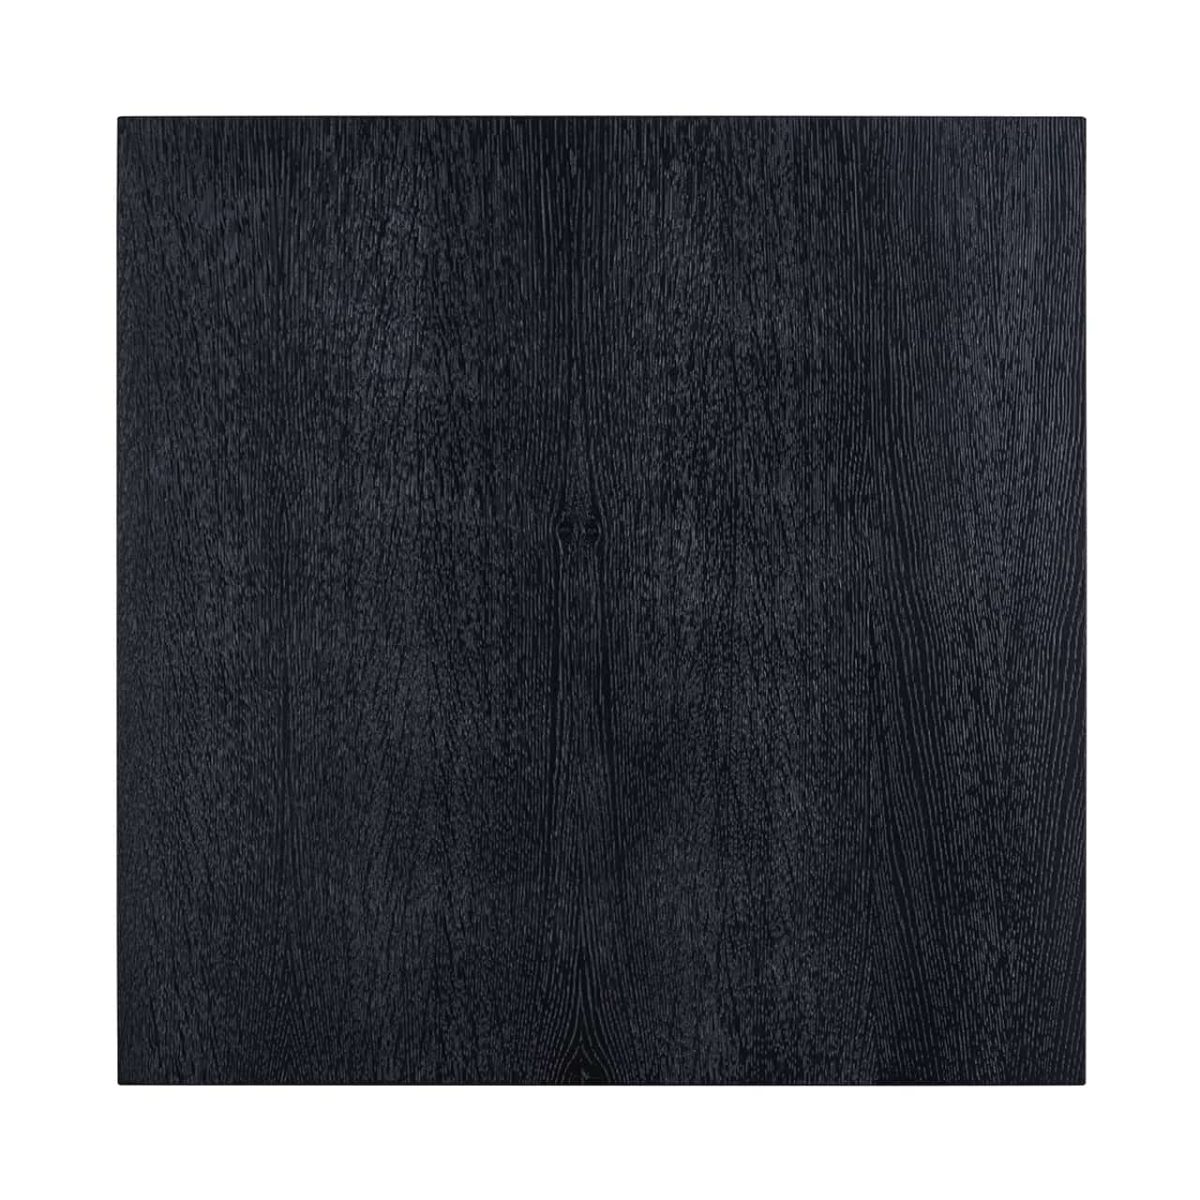 6531 - Salontafel Tetrad set of 4 (Black)